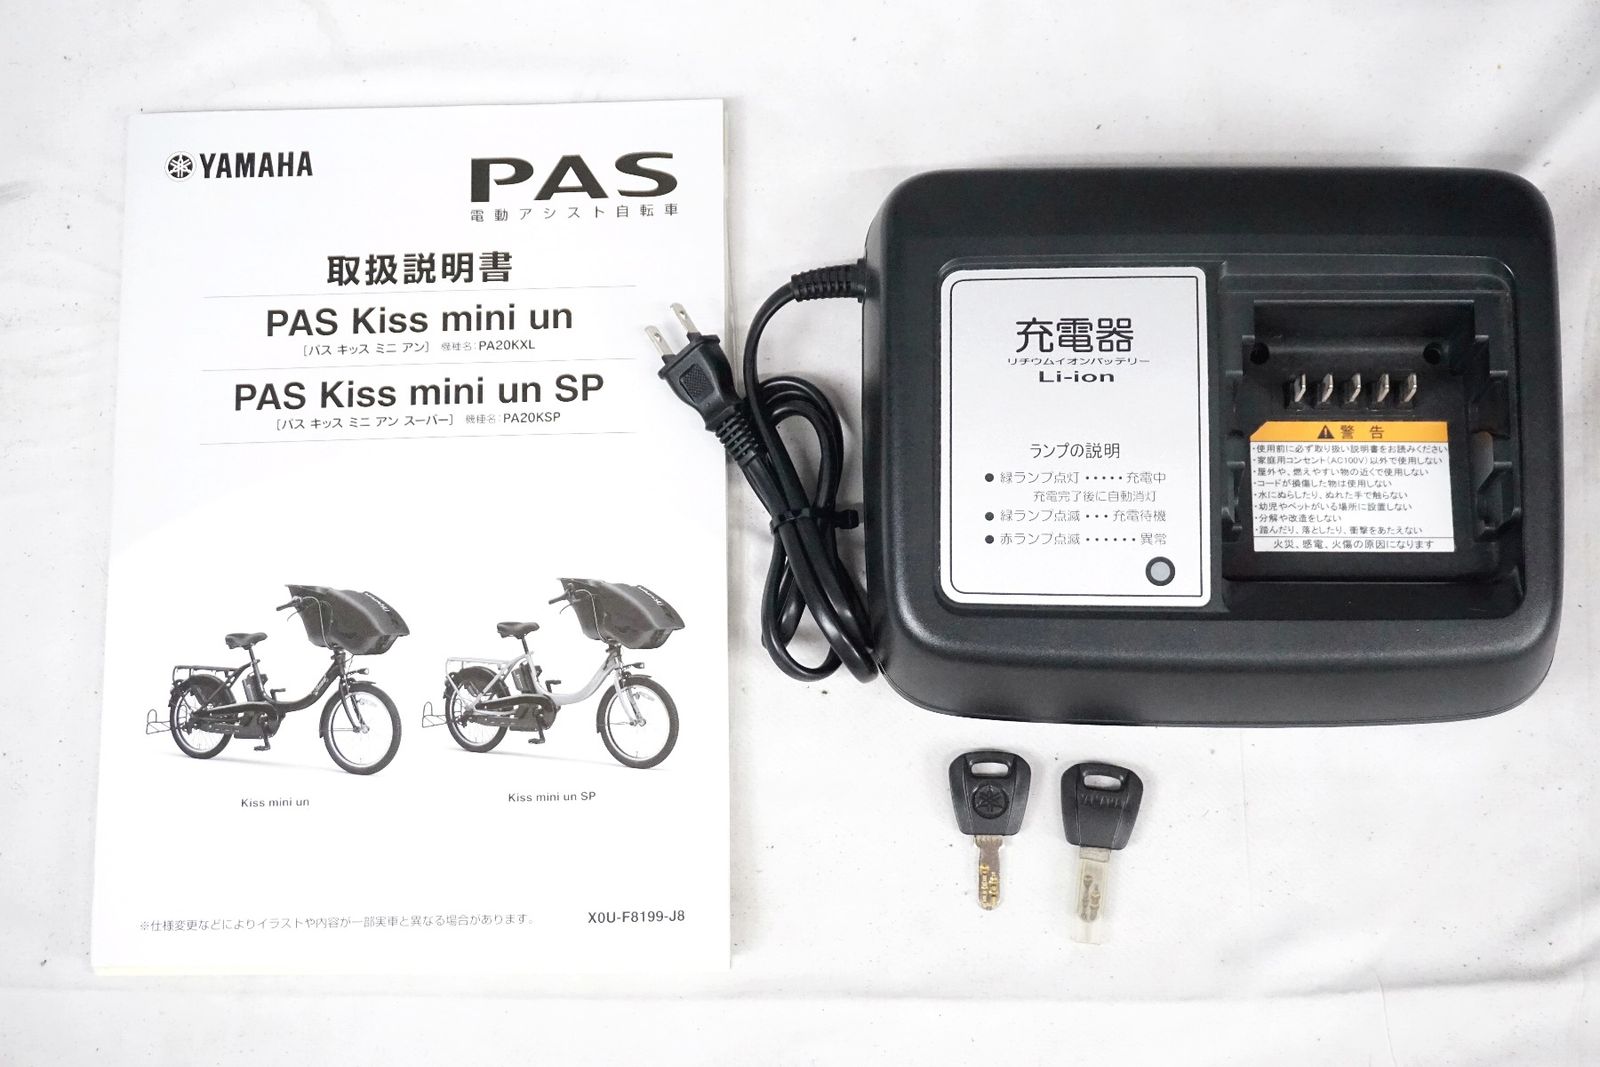 Yamaha PAS Mina 電動アシスト自転車 充電器付属 8.7Ah途中で送信してしまいました